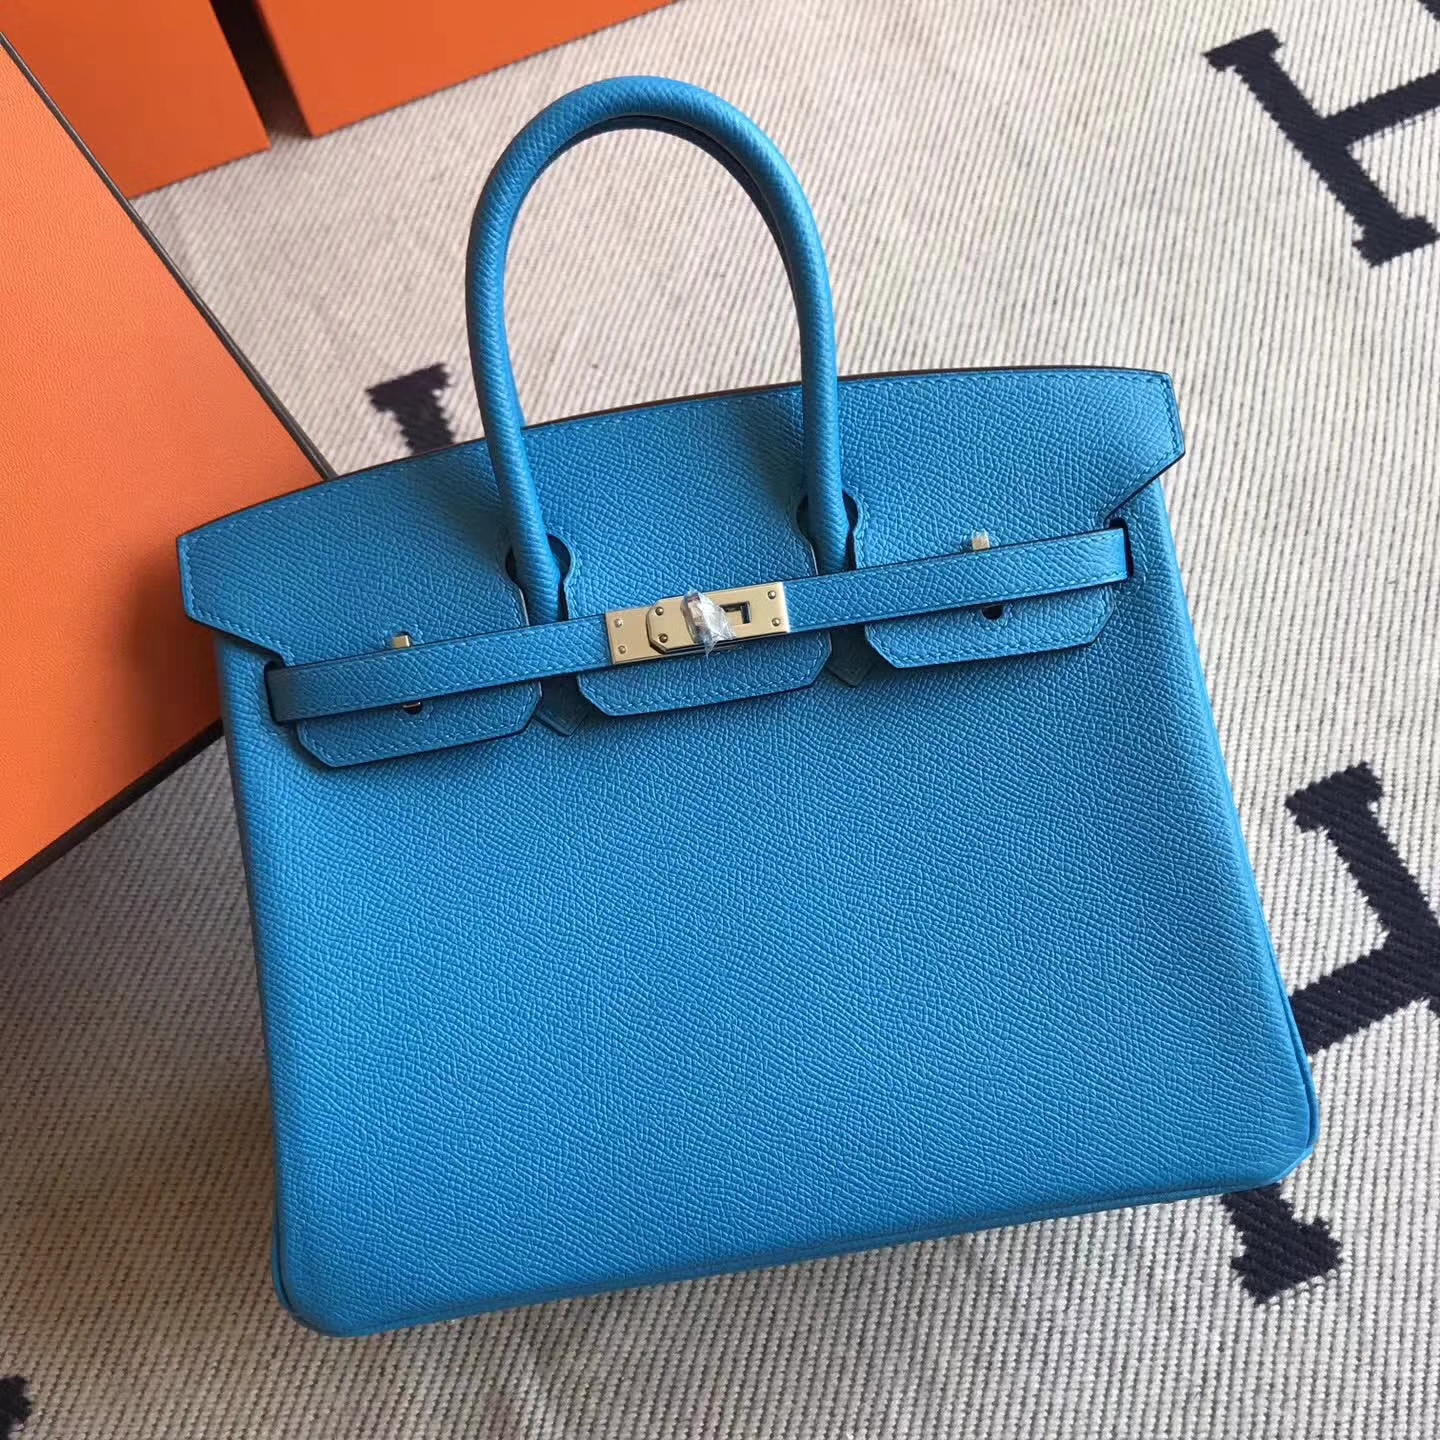 On Sale Hermes Birkin25cm Tote Bag in B3 Blue Zanzibar Epsom Leather